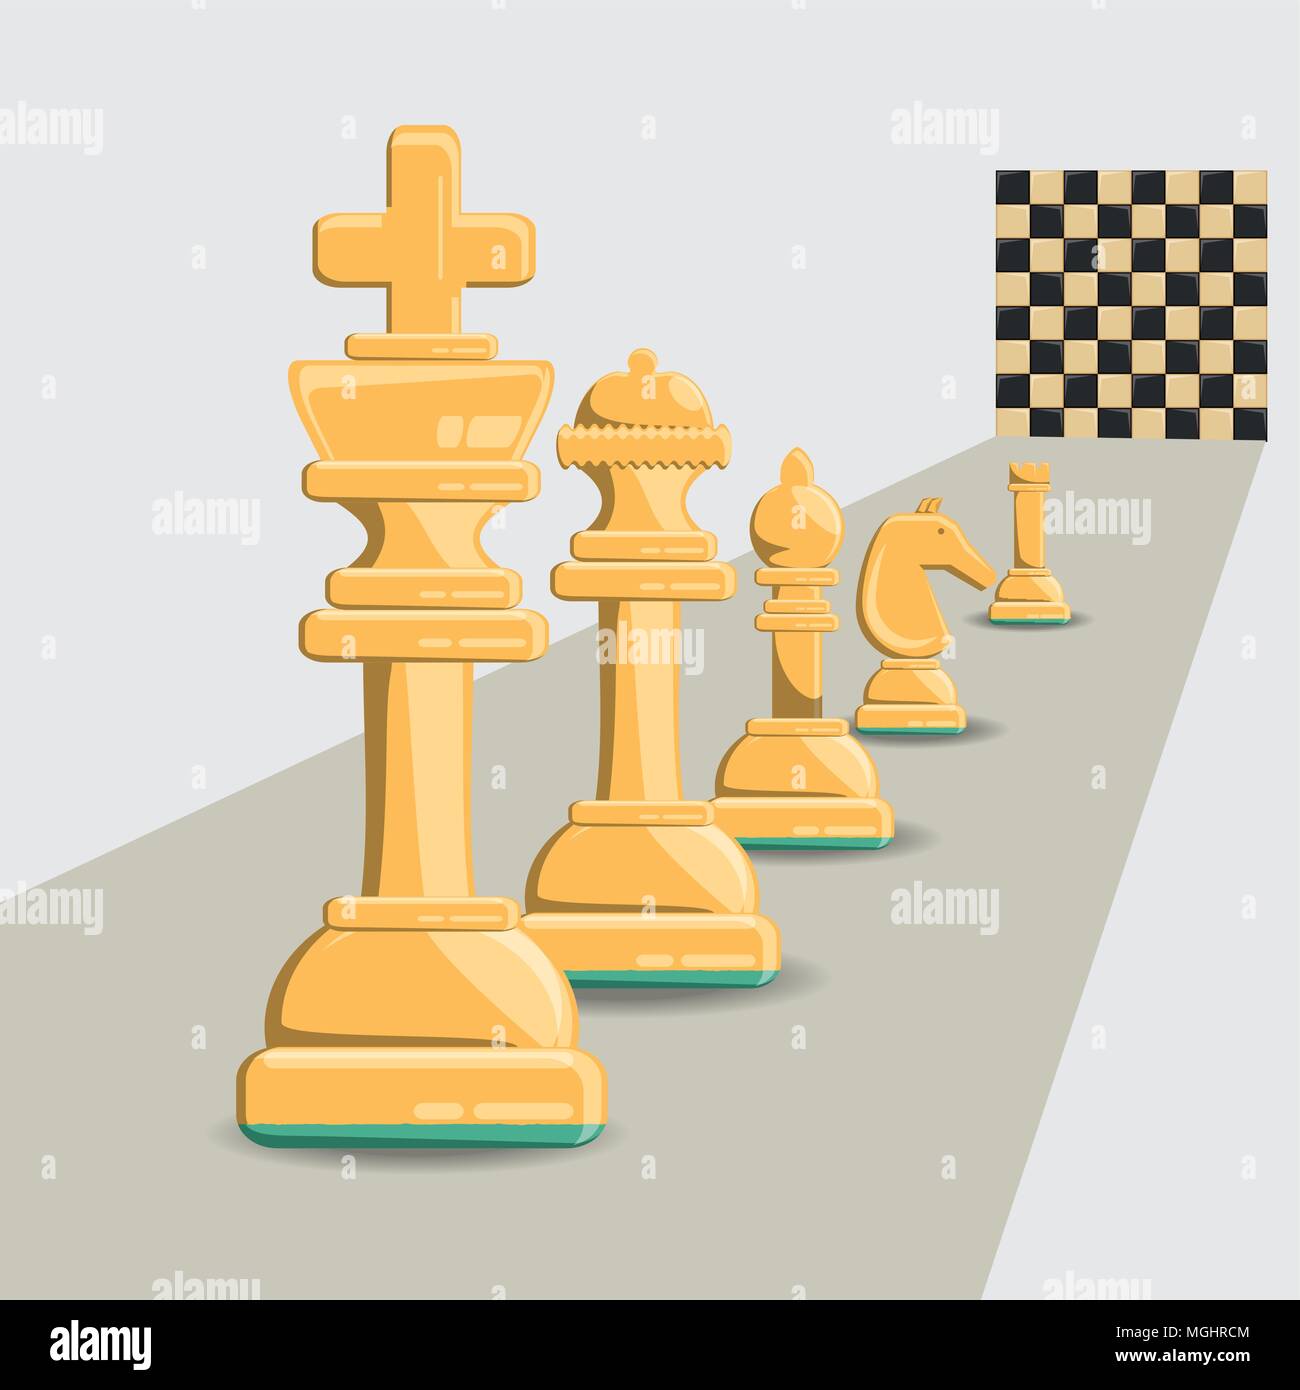 Chess Games - ChessBox Free Games